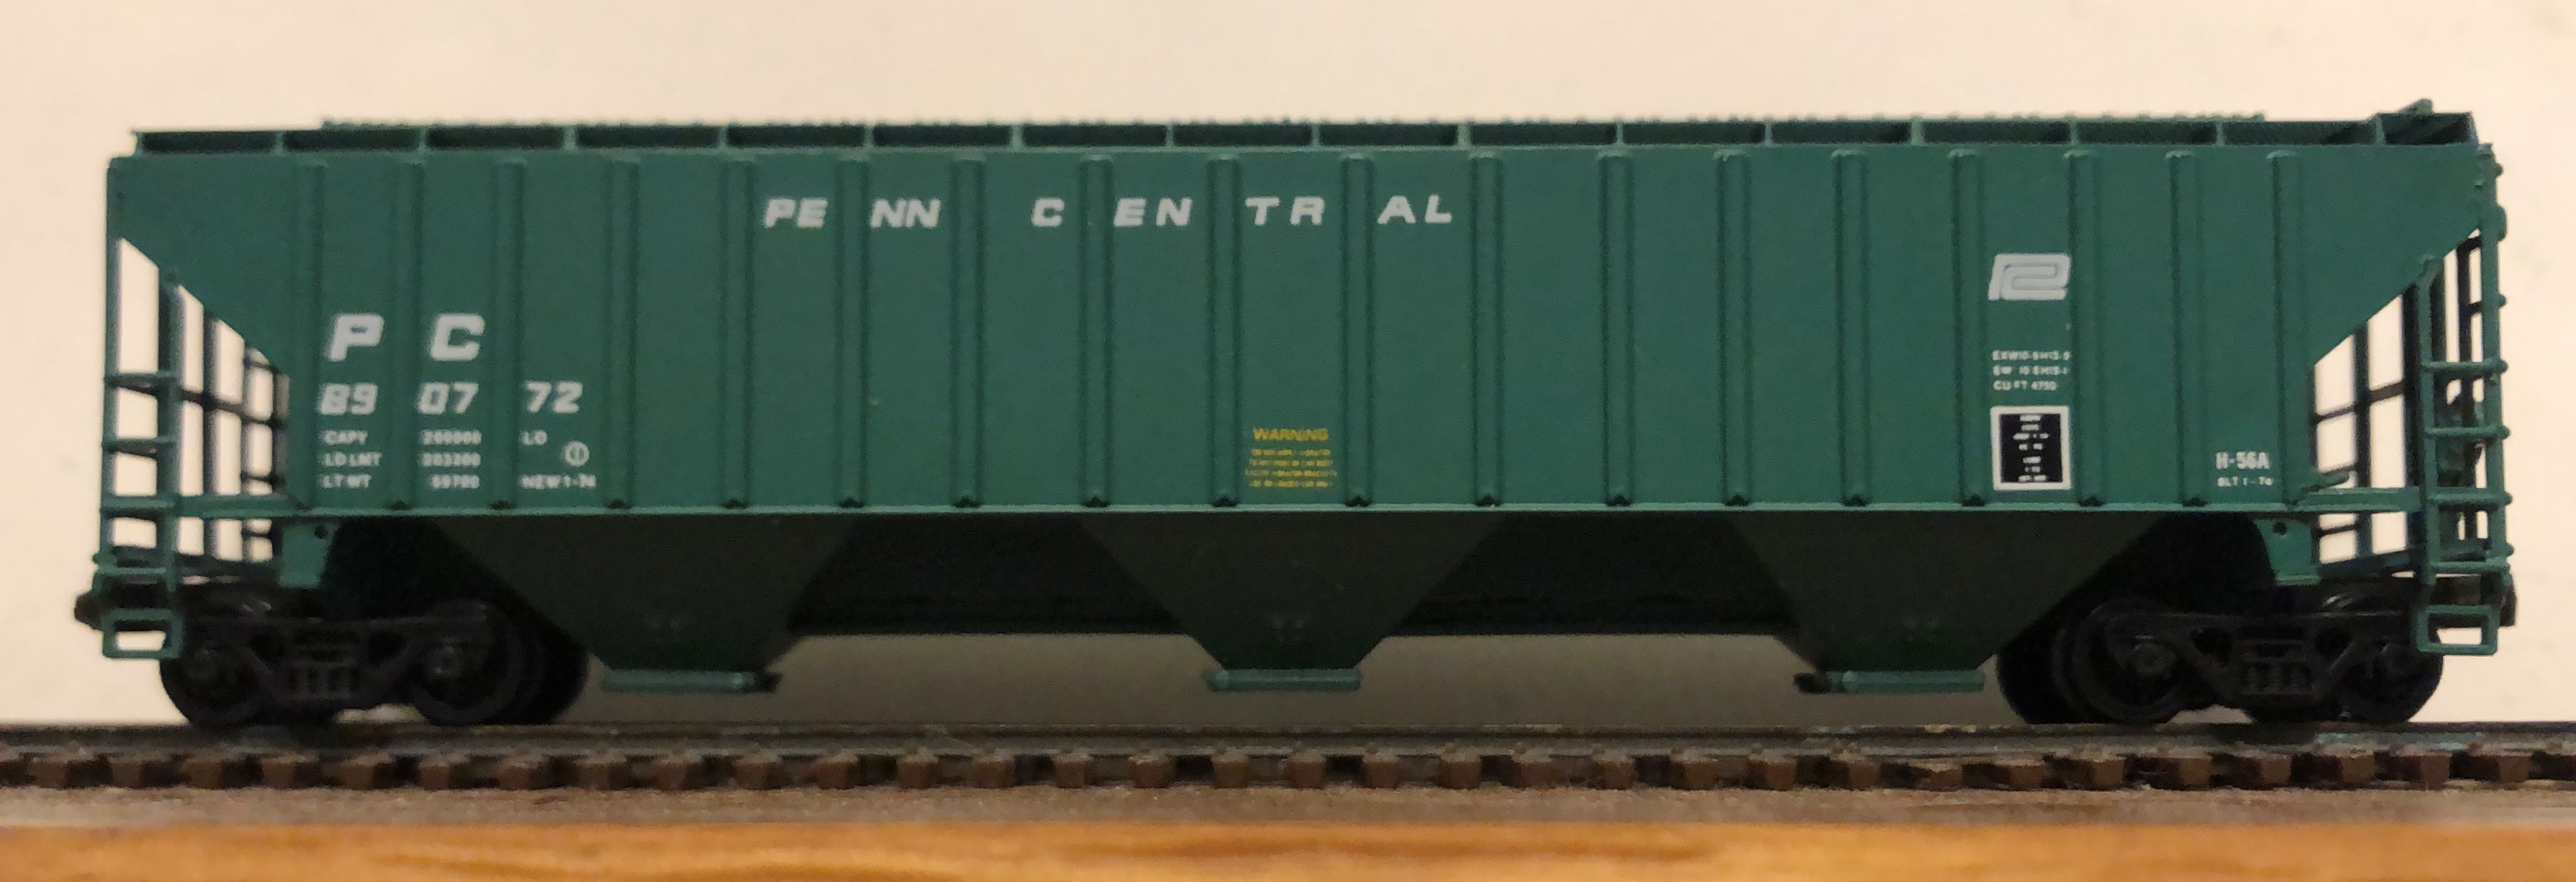 N Scale - Brooklyn Locomotive Works - BLW-1168-B3 - Covered Hopper, 3-Bay, Thrall 4750 - Penn Central - 890772